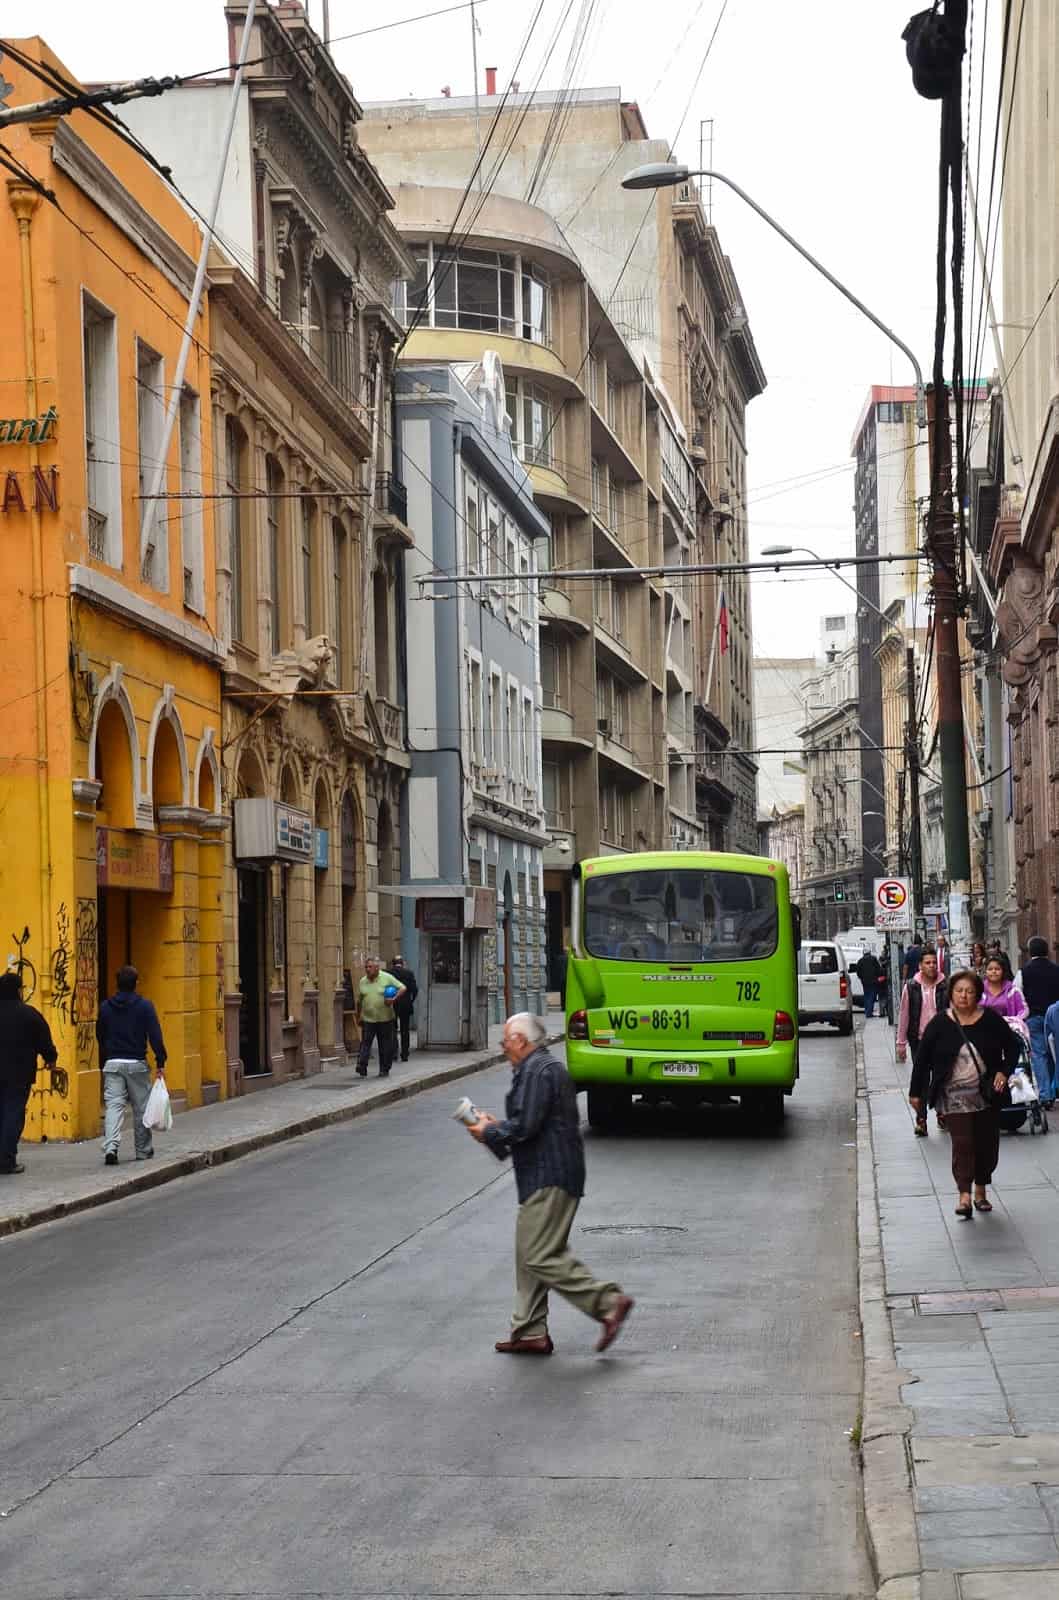 Calle Prat in Valparaíso, Chile